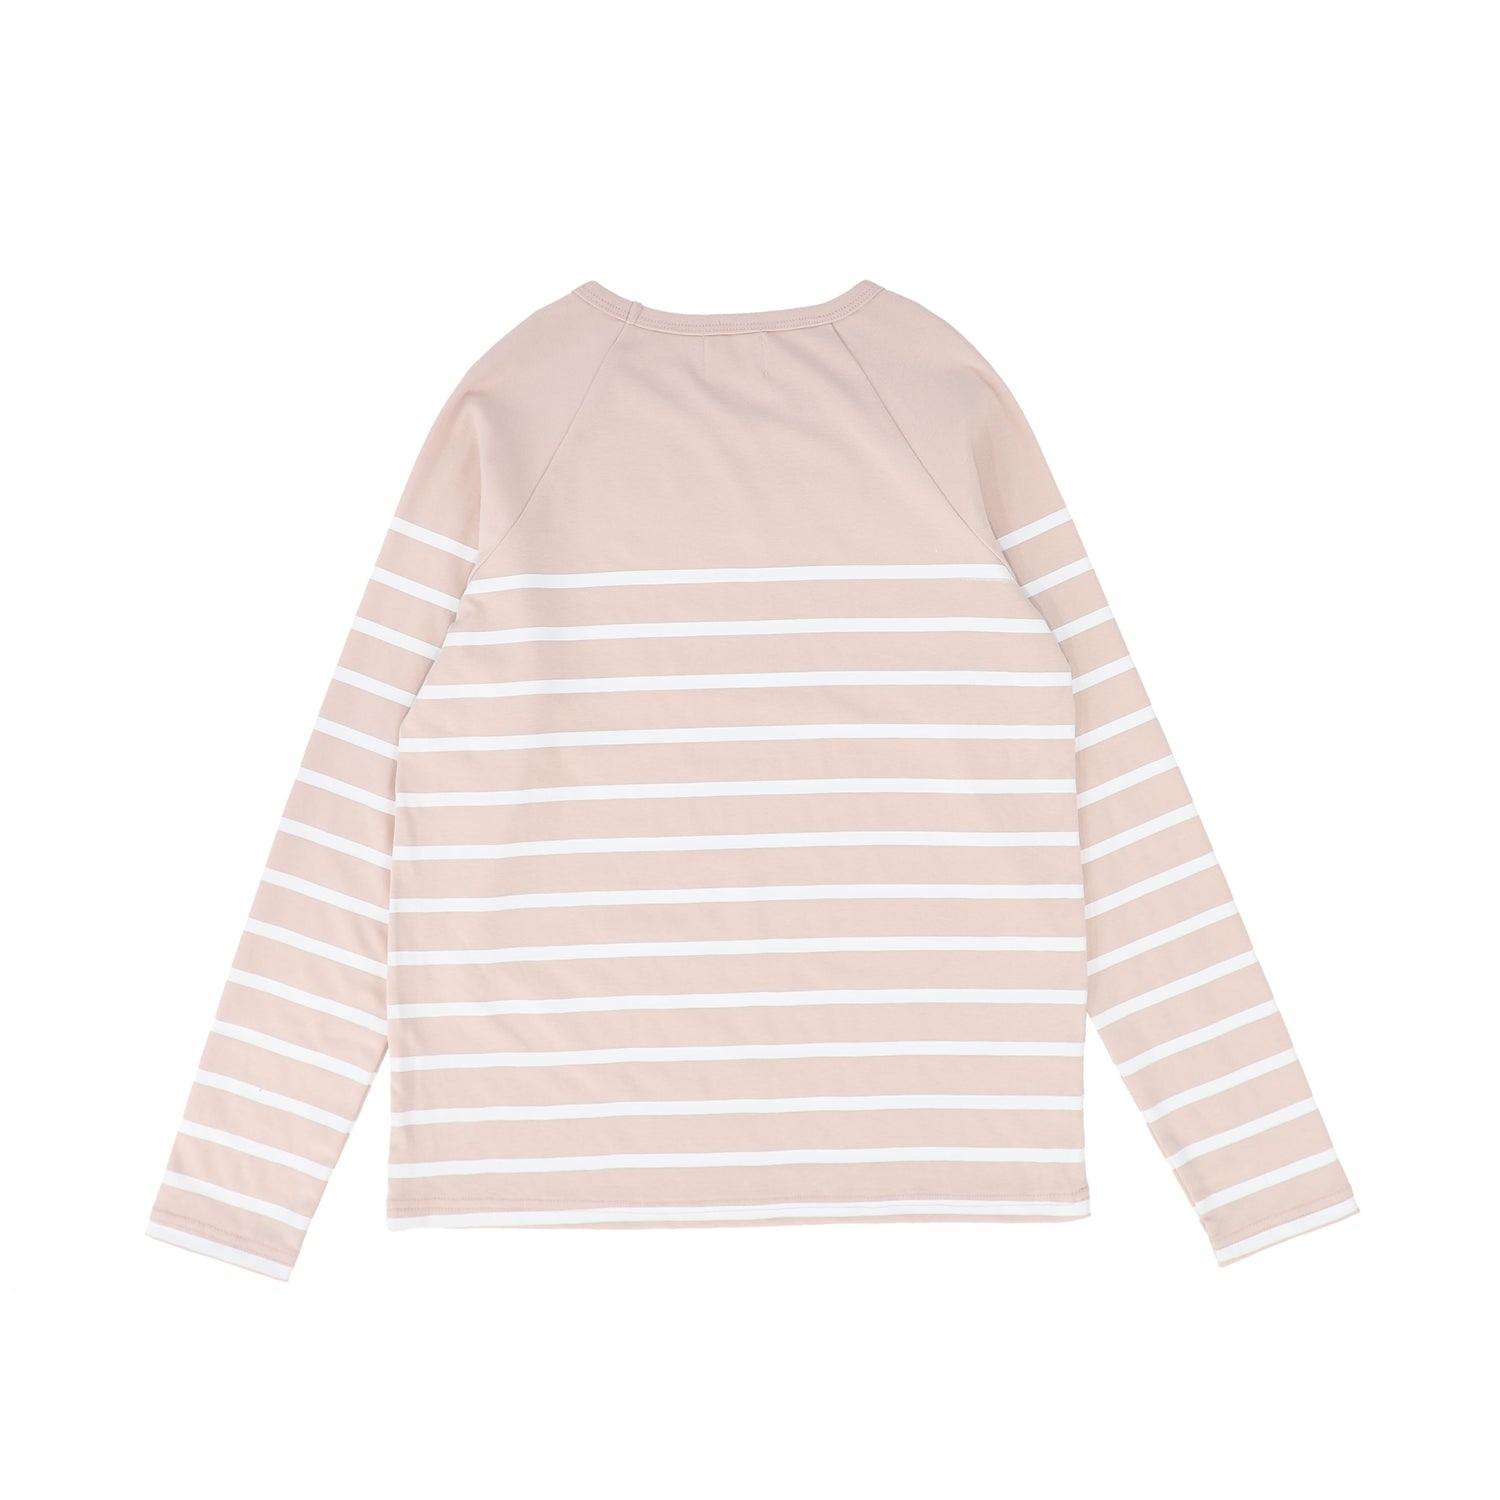 Bamboo Pink Striped Long Sleeve Tee Shirt